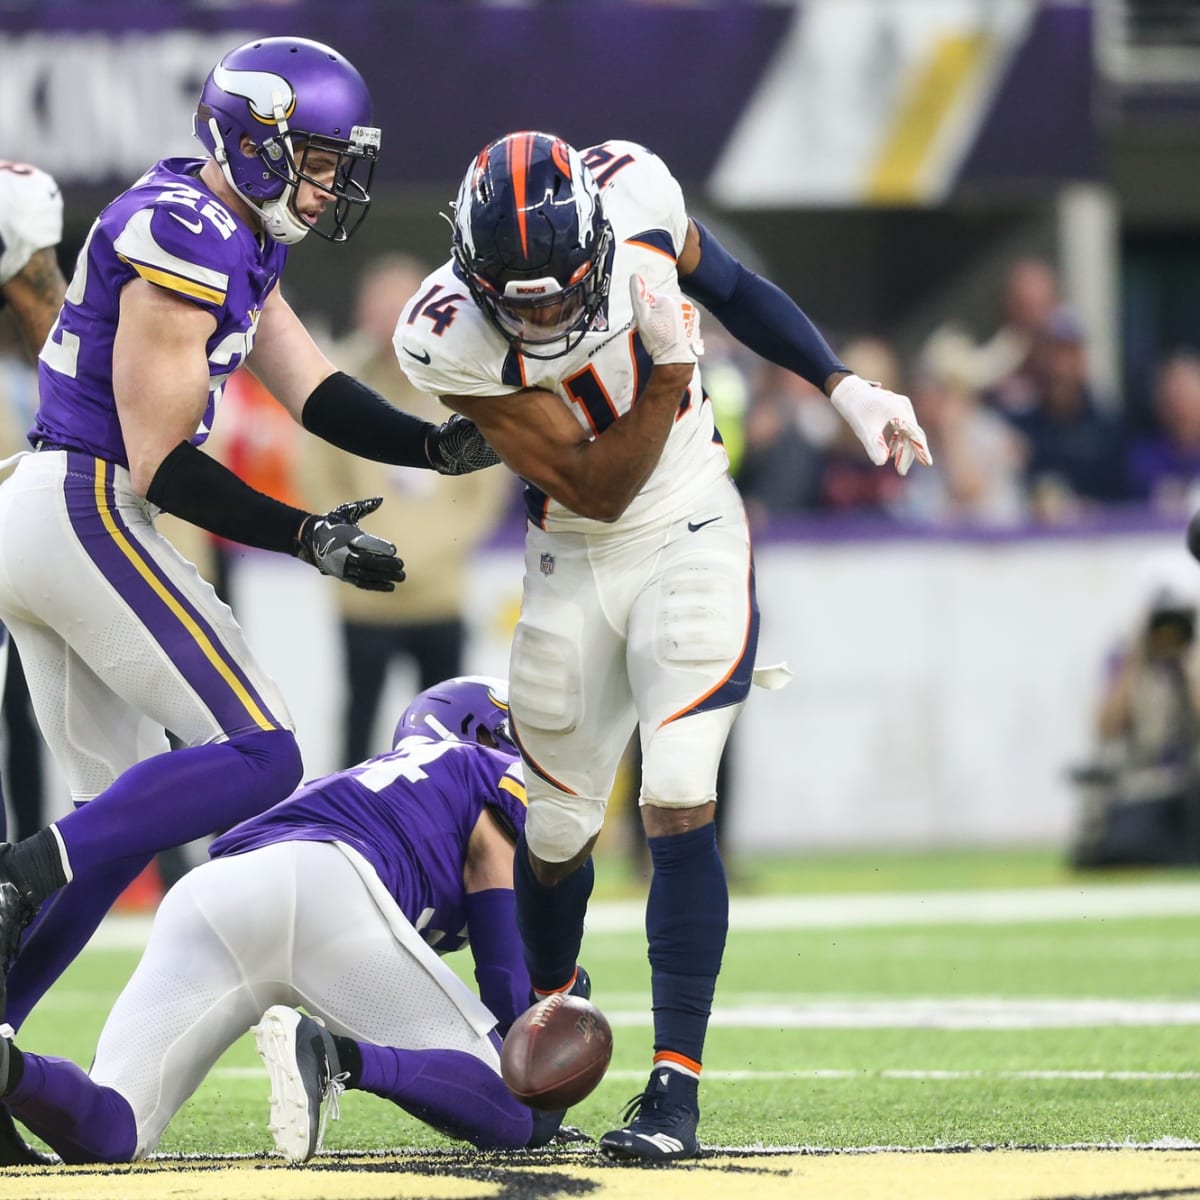 DENVER FOOTBALL: NFL preseason: Broncos vs Vikings on Saturday